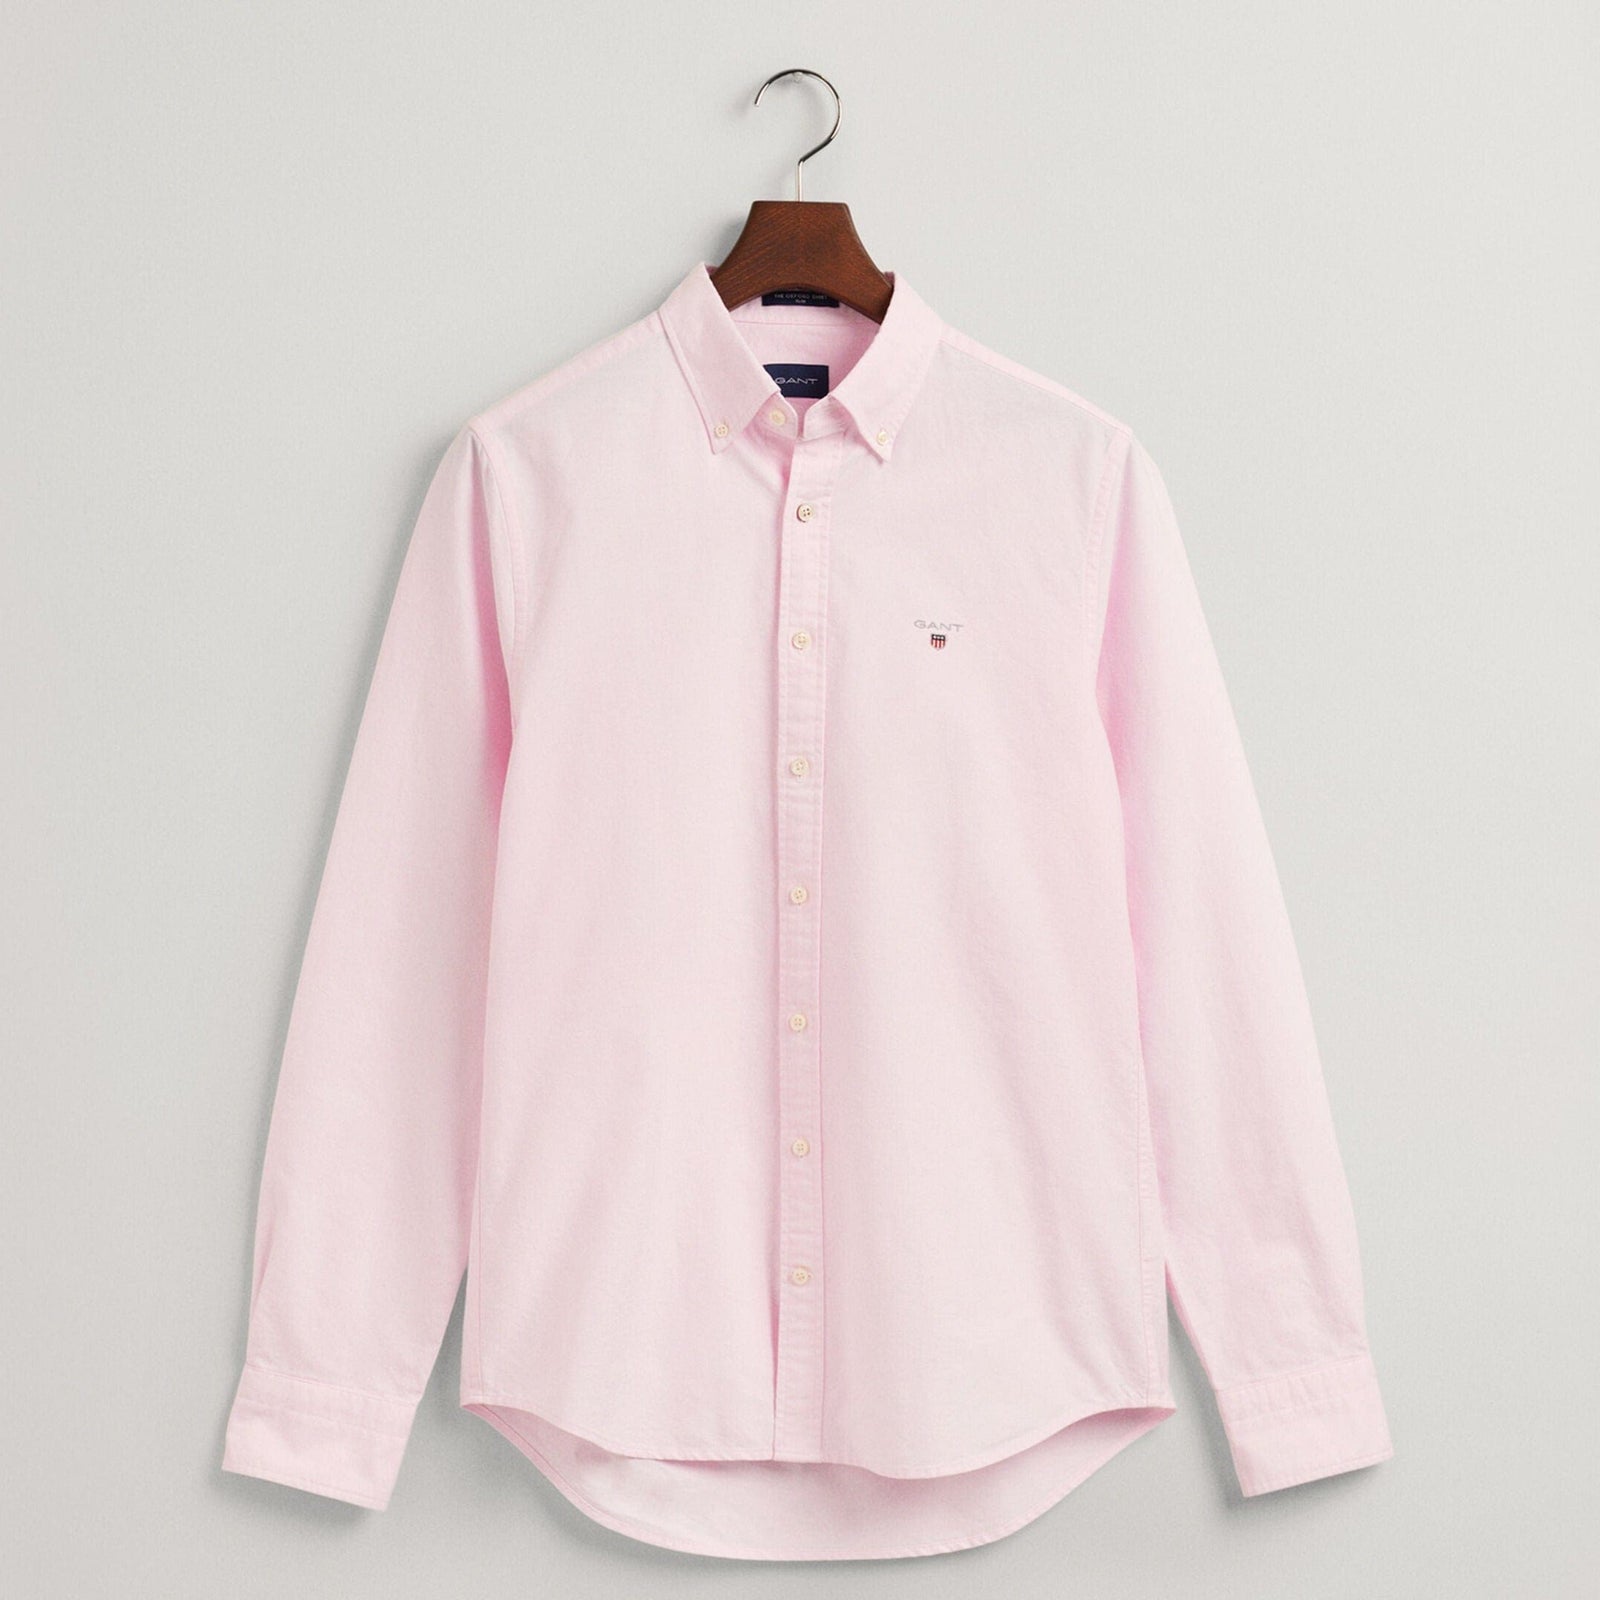 Gant Slim Fit Oxford Shirt Light Pink